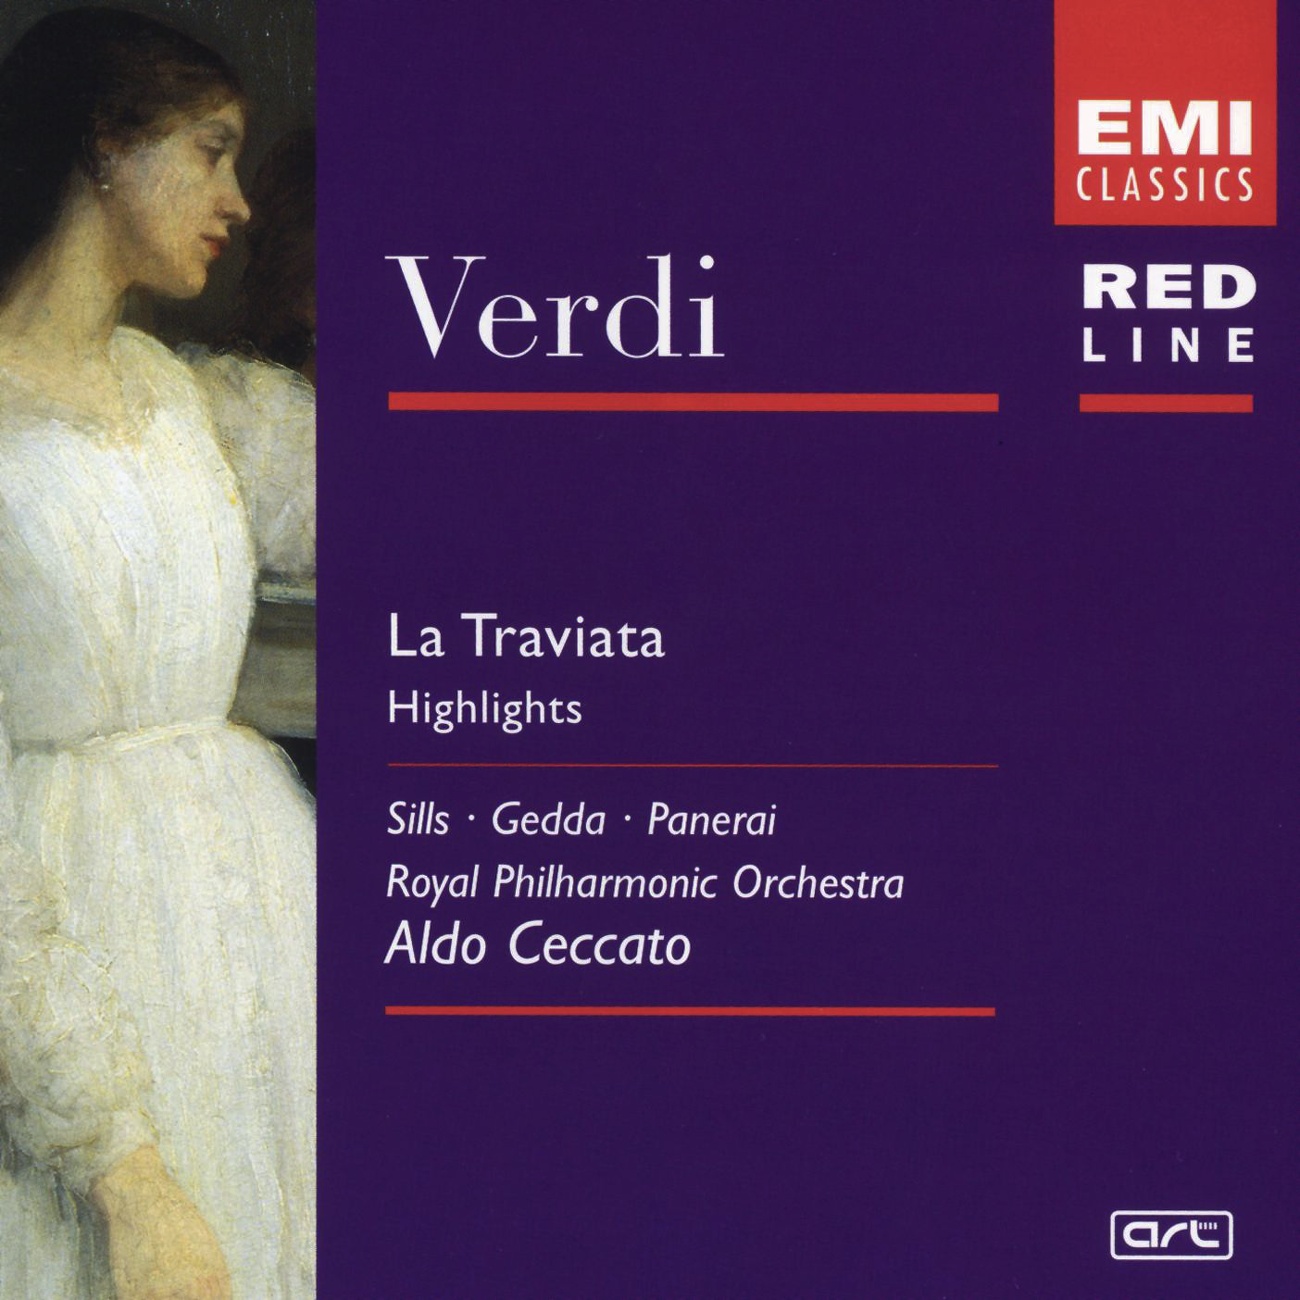 La Traviata (highlights), ACT 1: Libiamo, ne' lieti calci (Brindisi)